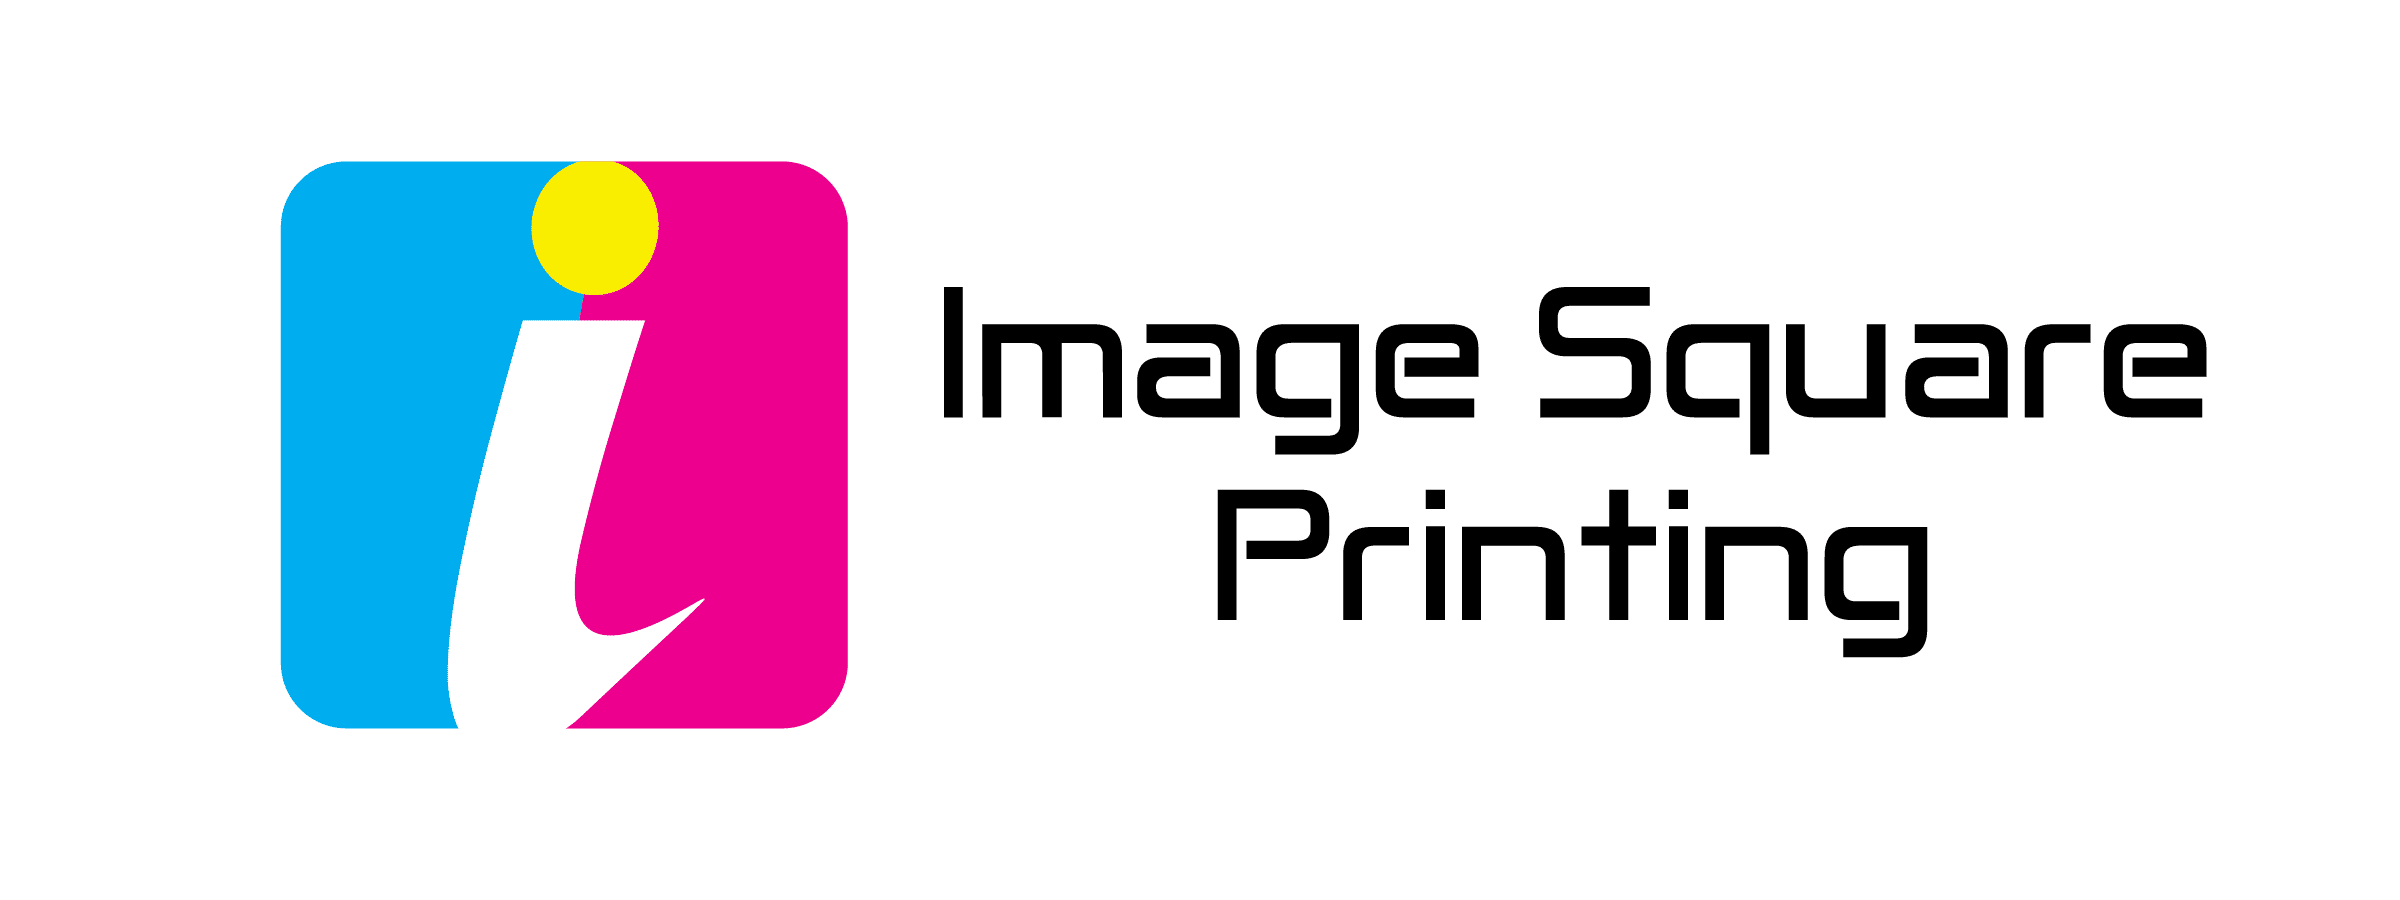 Image Square Printing Holiday Logo 2021